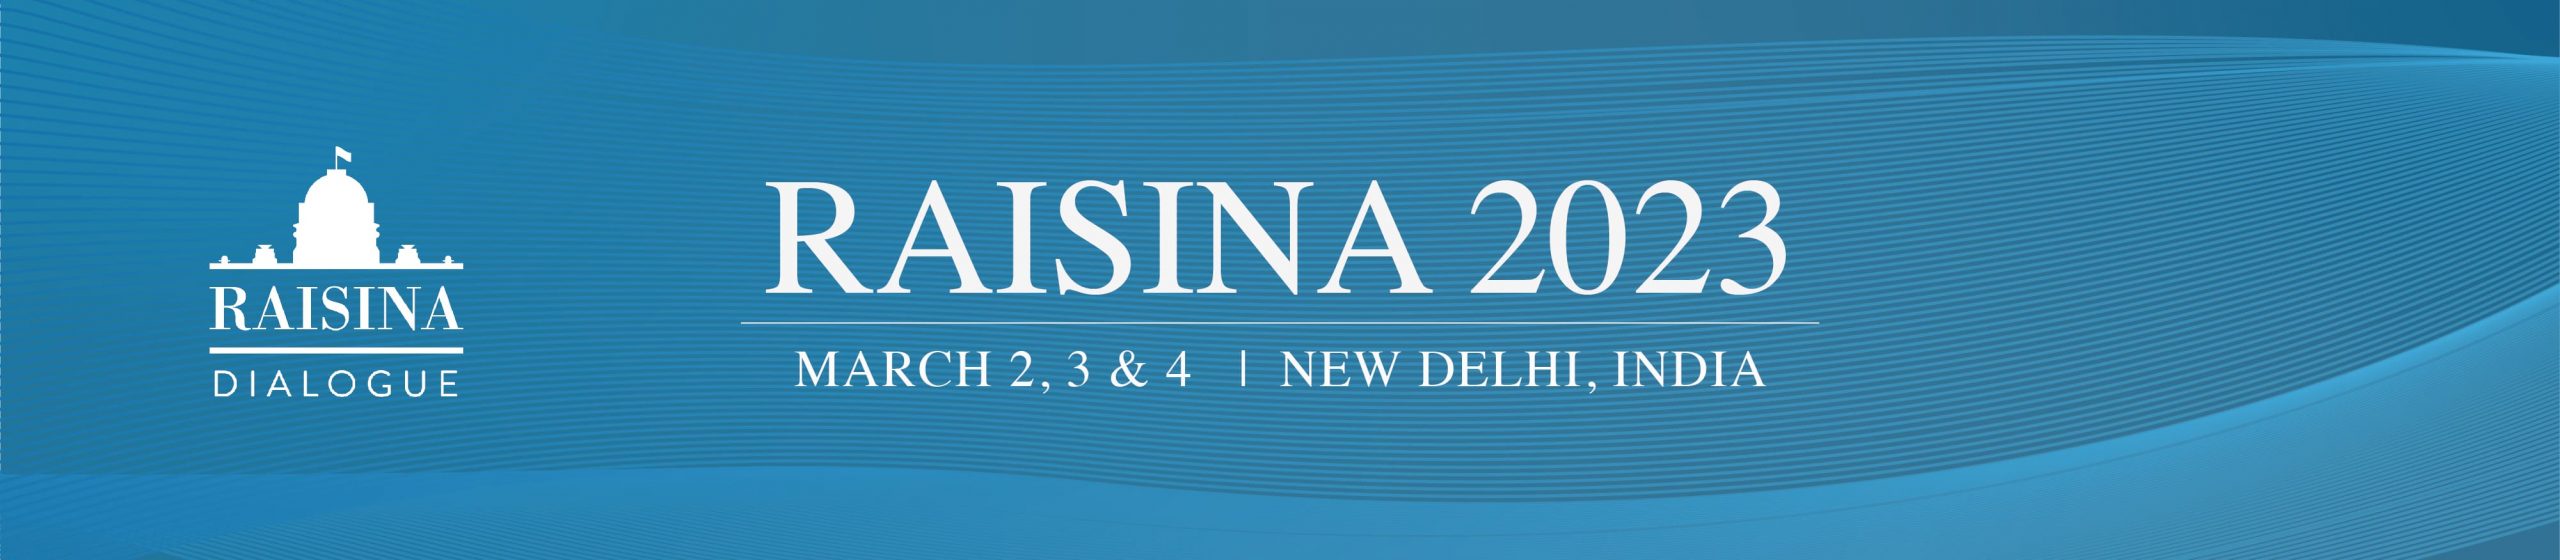 Raisina Dialogue 2022